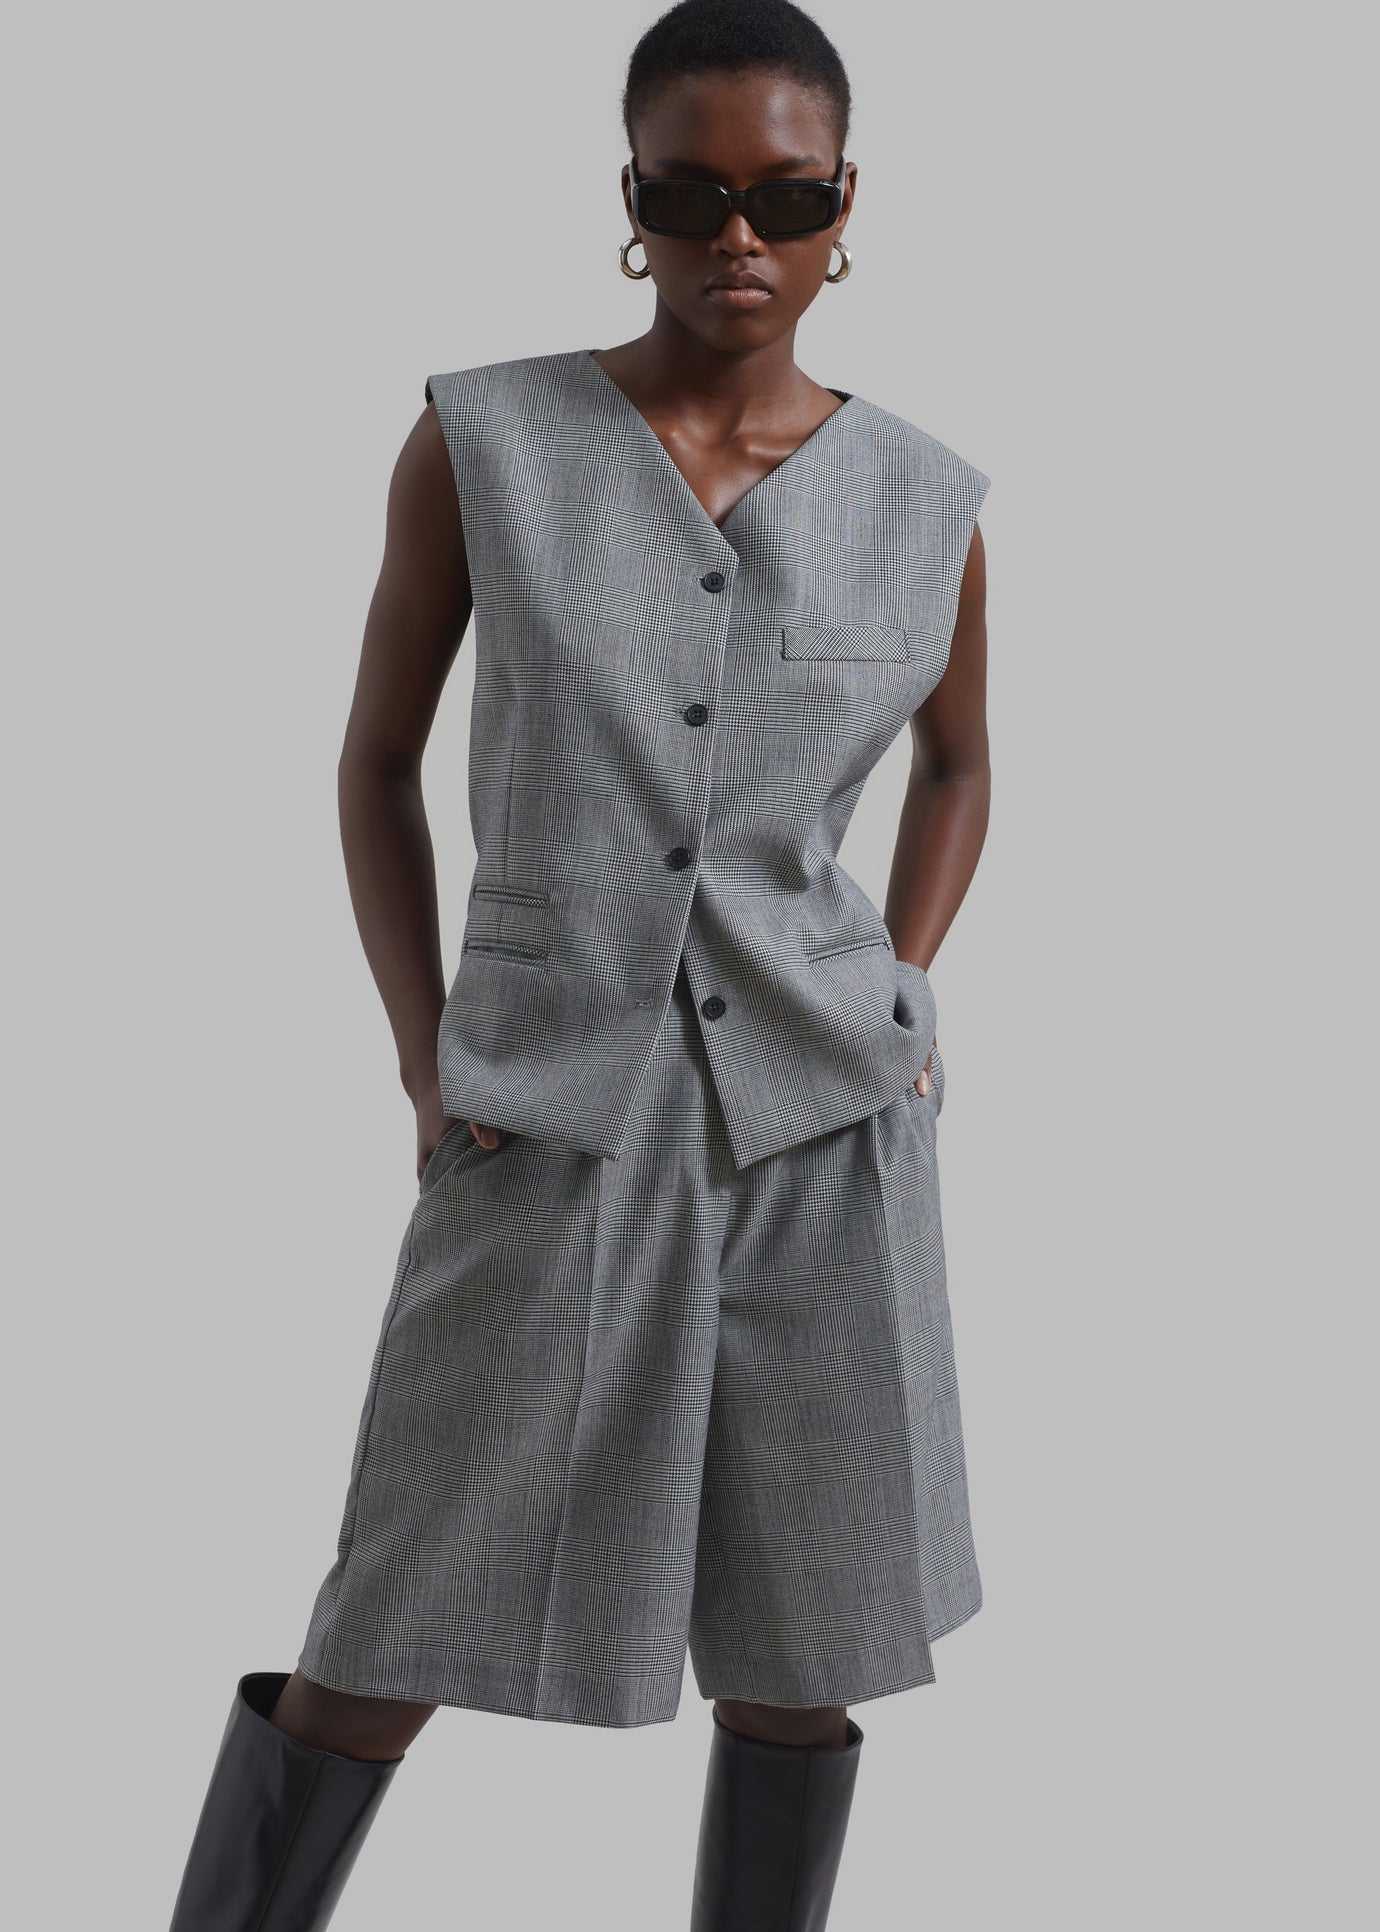 Essie Wool Bermuda Shorts - Light Grey Plaid